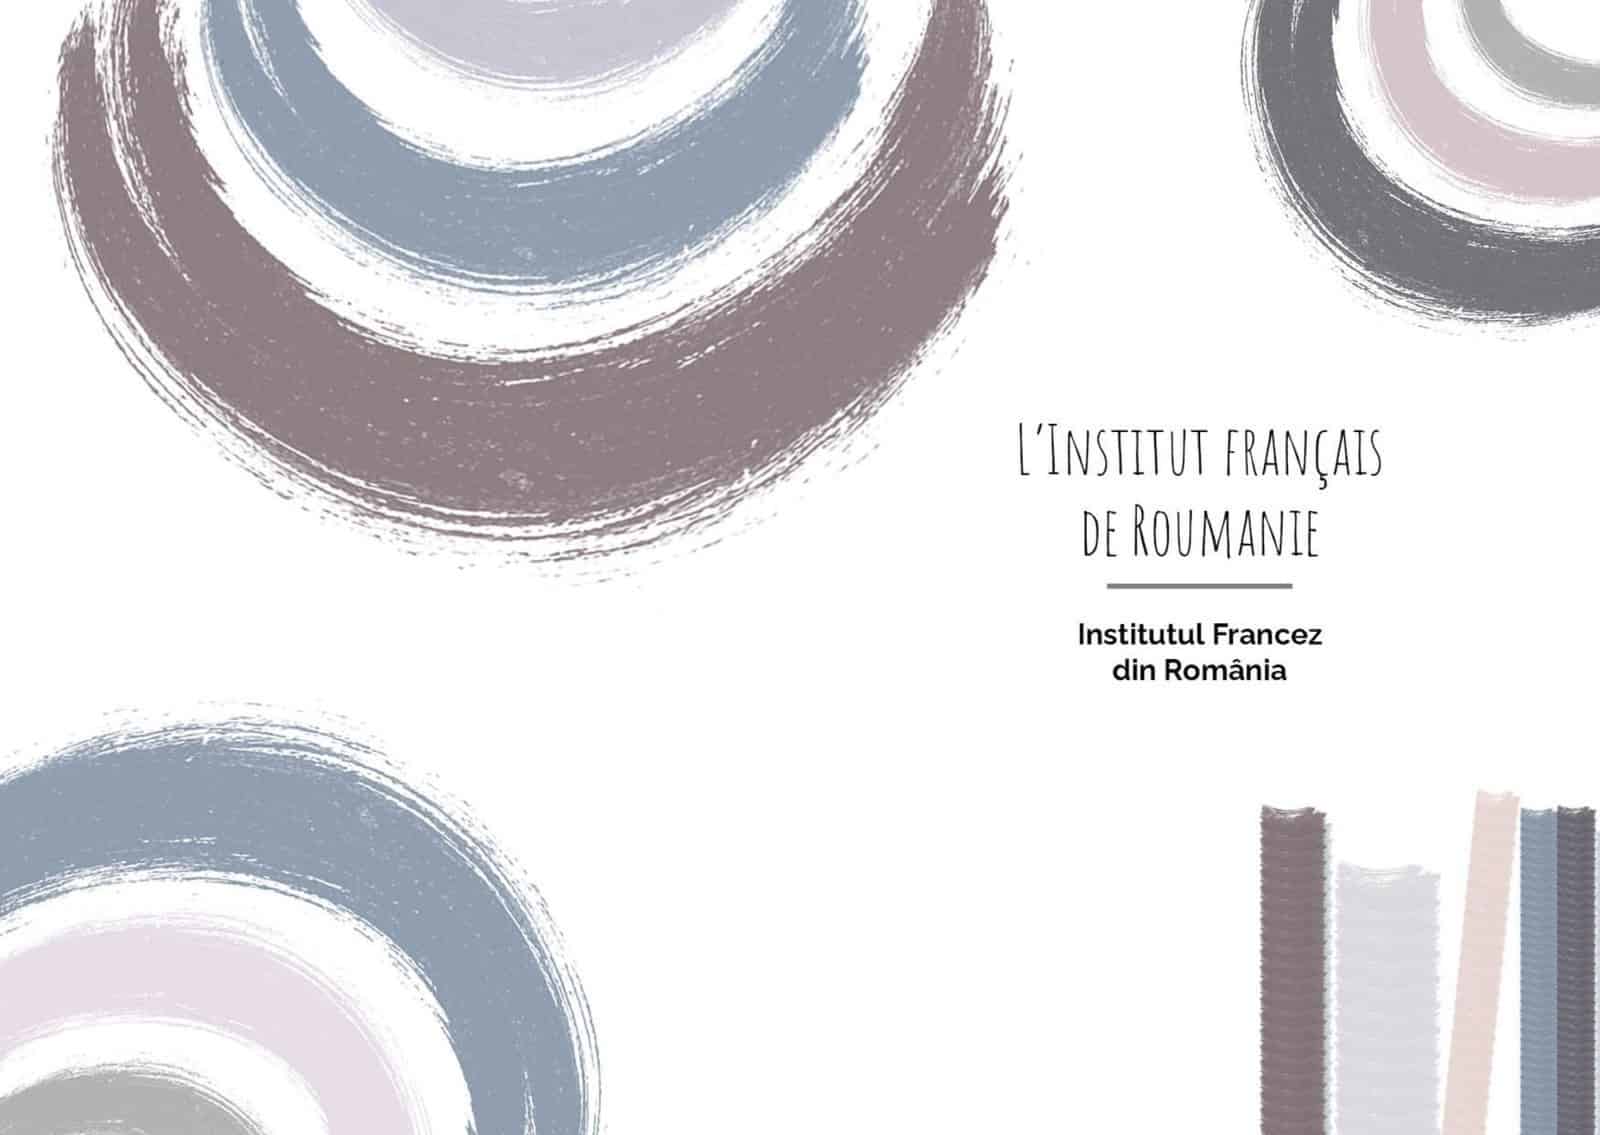 Premiul Goncourt, design, publishing design, Toud, Institutul francez din Romania, booklet